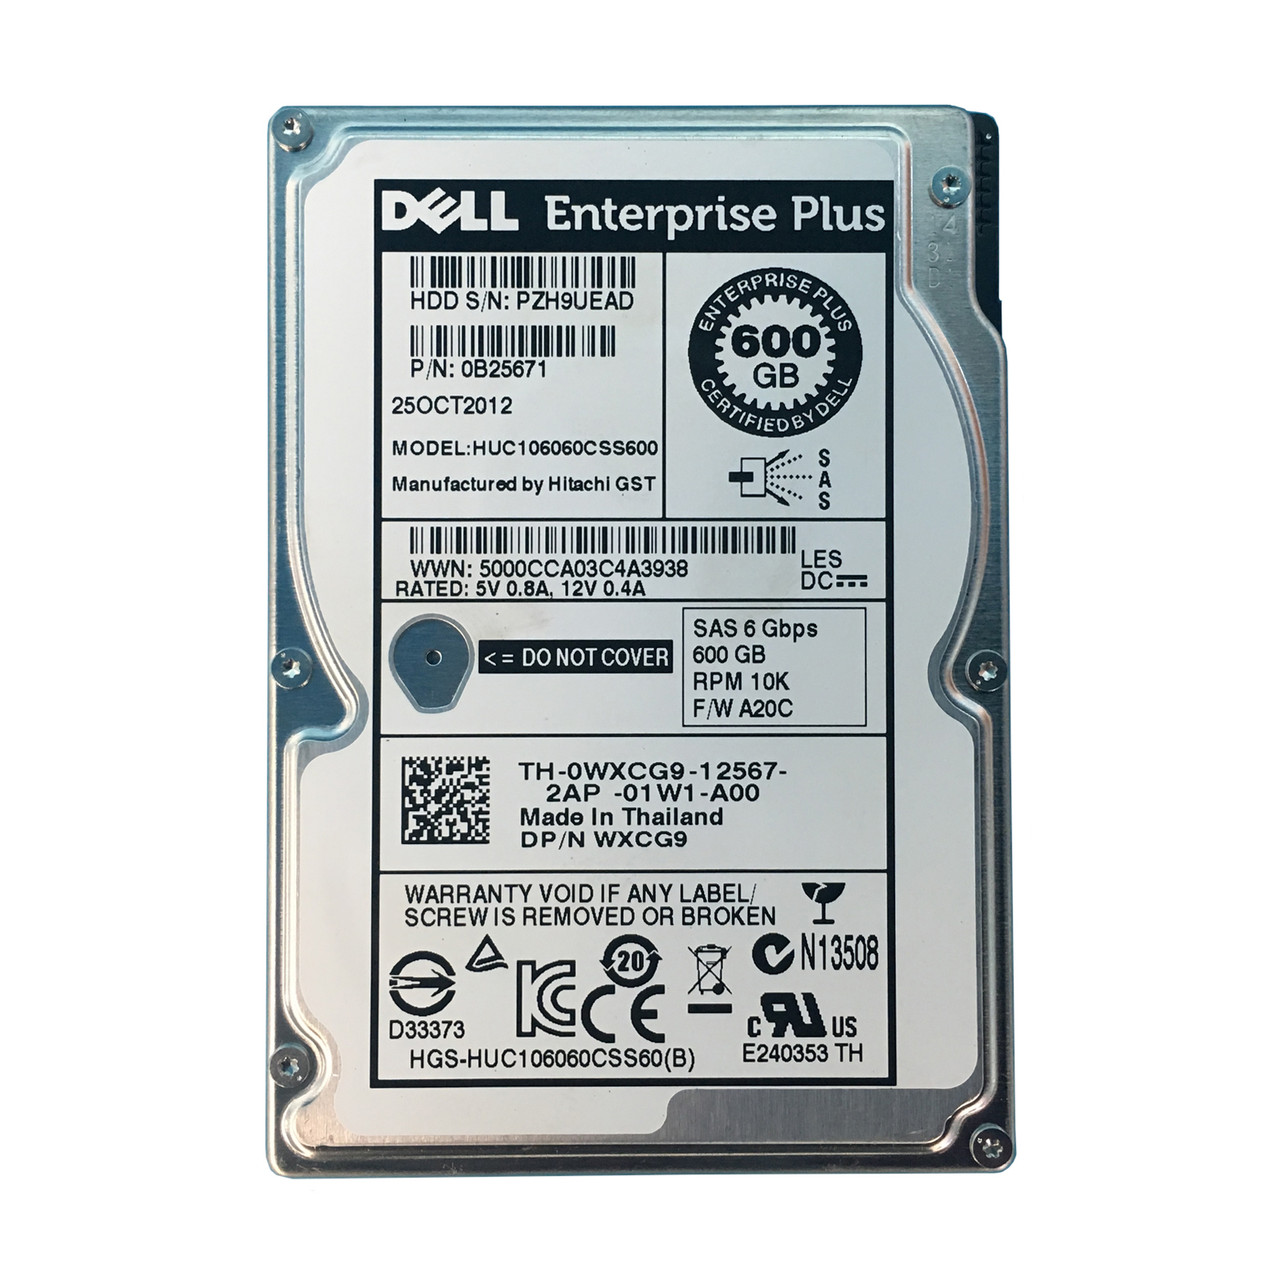 Dell WXCG9 EqualLogic 600GB SAS 10K 6GBPS 2.5" Drive 0B24671 HUC106060CSS600